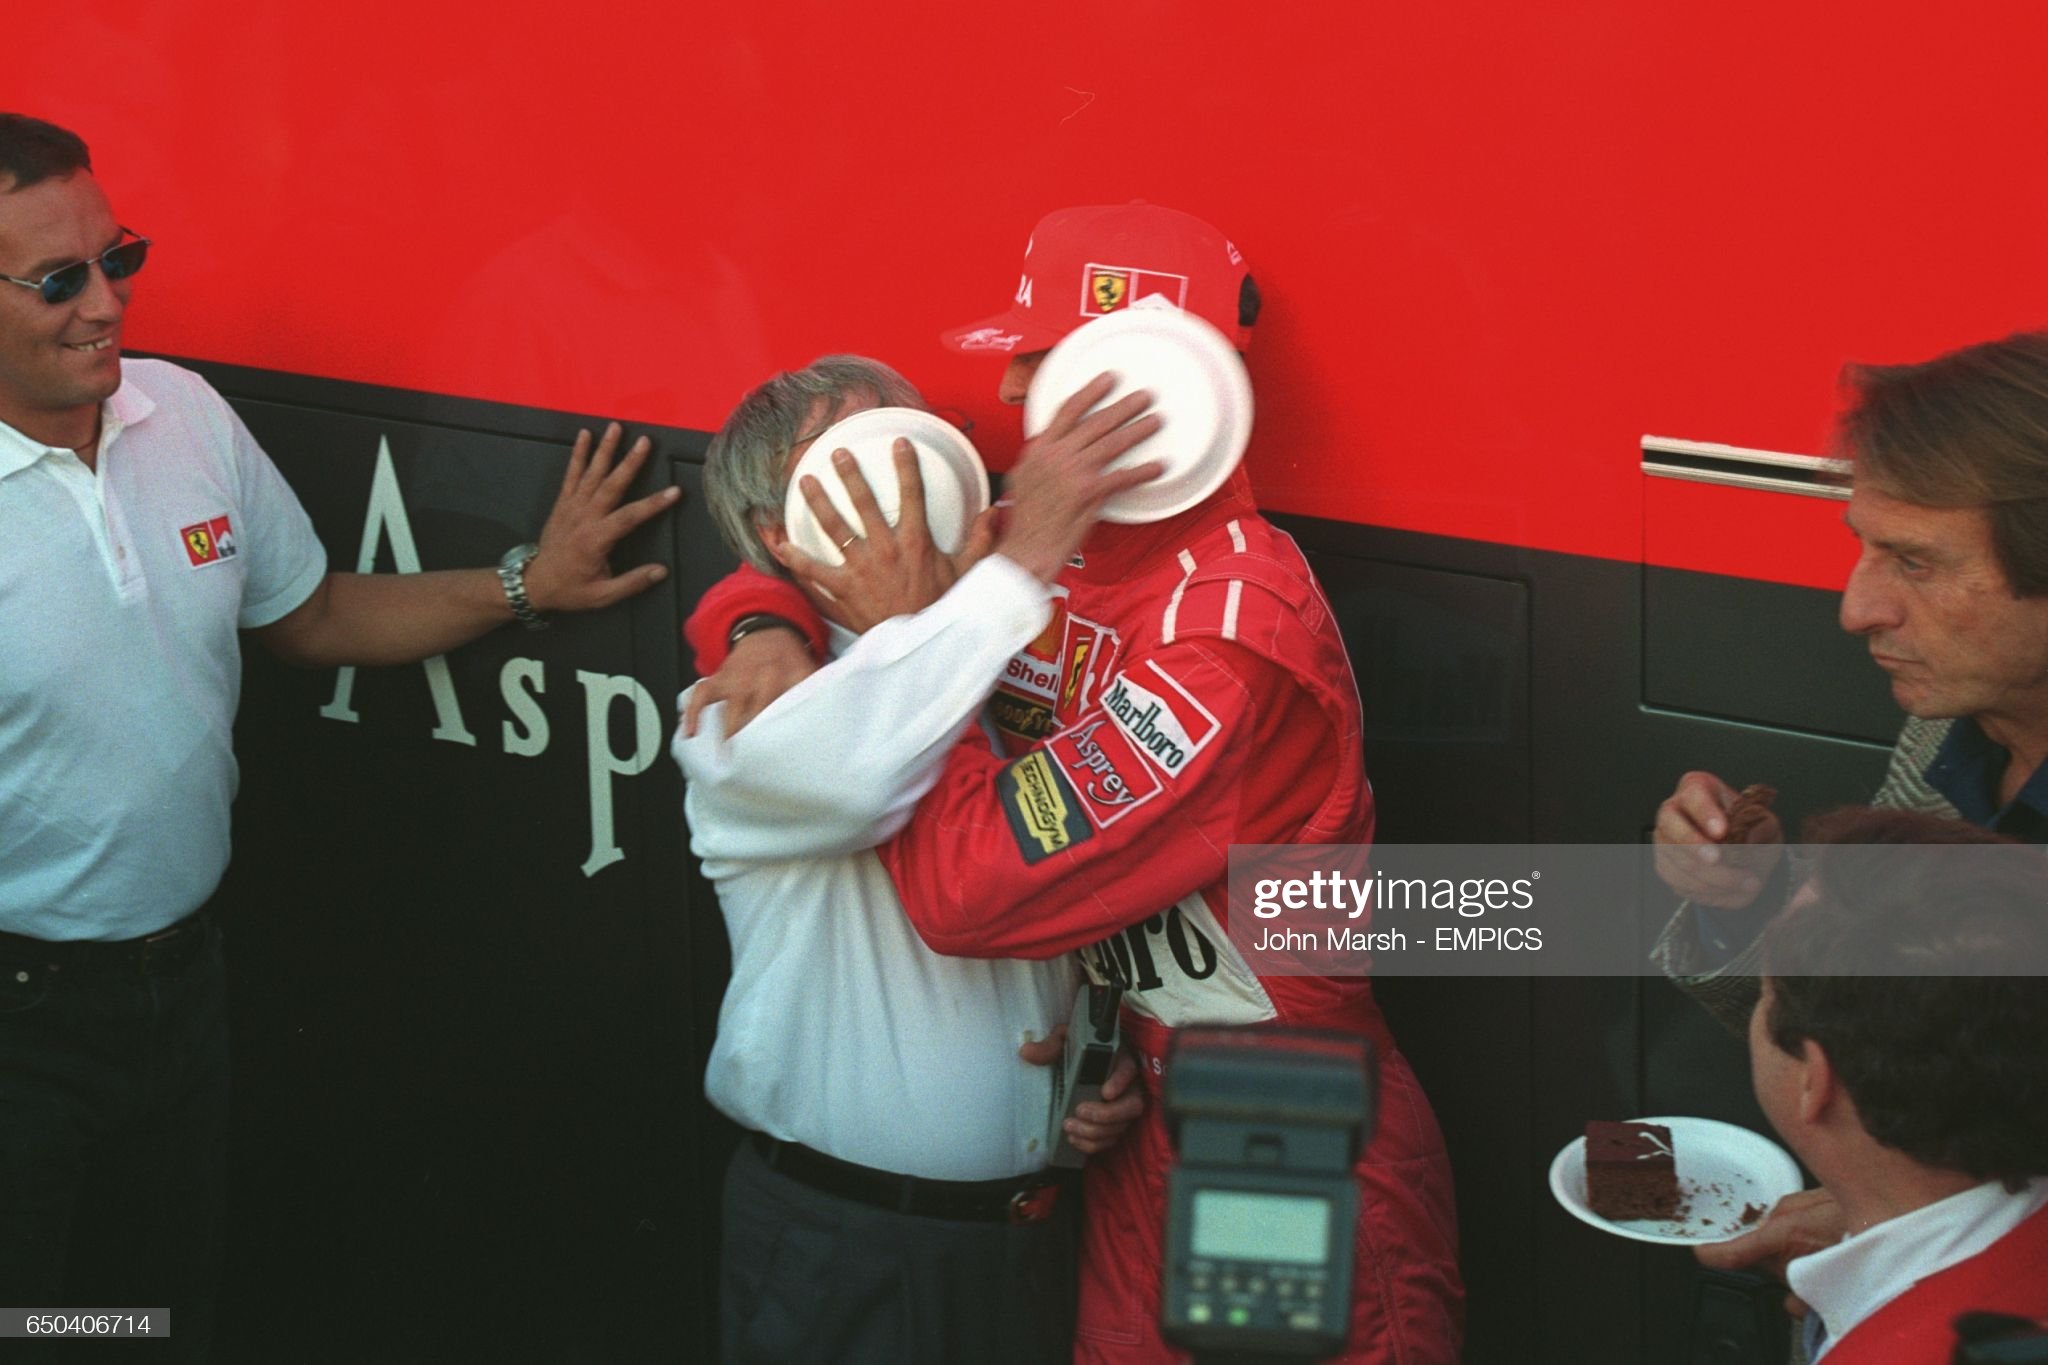 Bernie Ecclestone and Schumacher cakes in the face